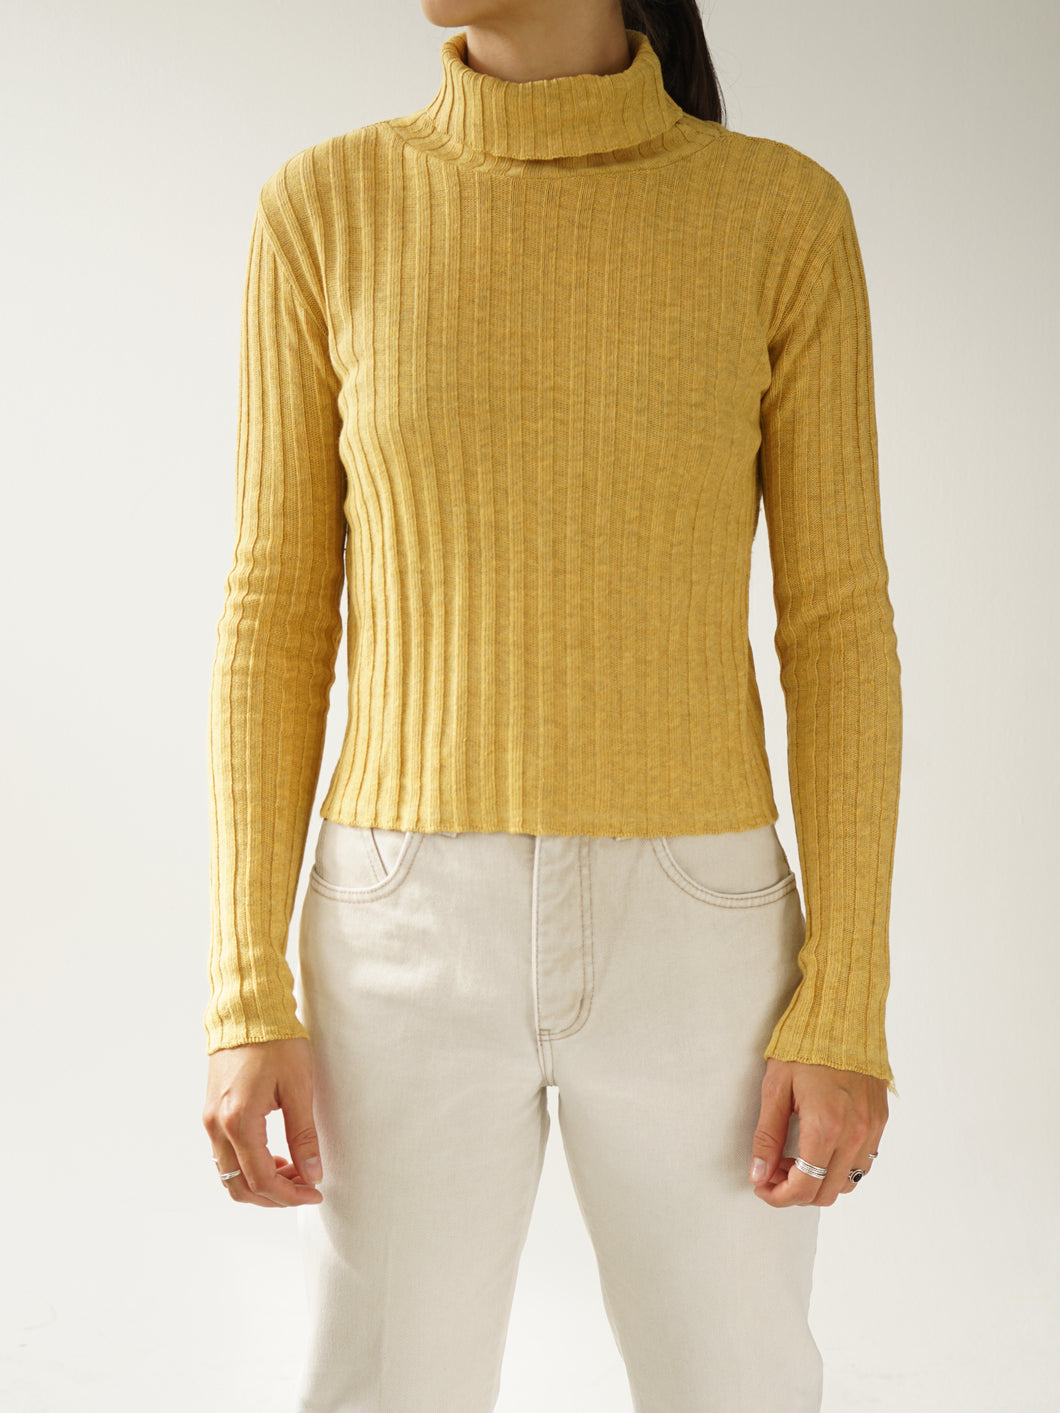 Vintage yellow turtleneck Ilanco shirt